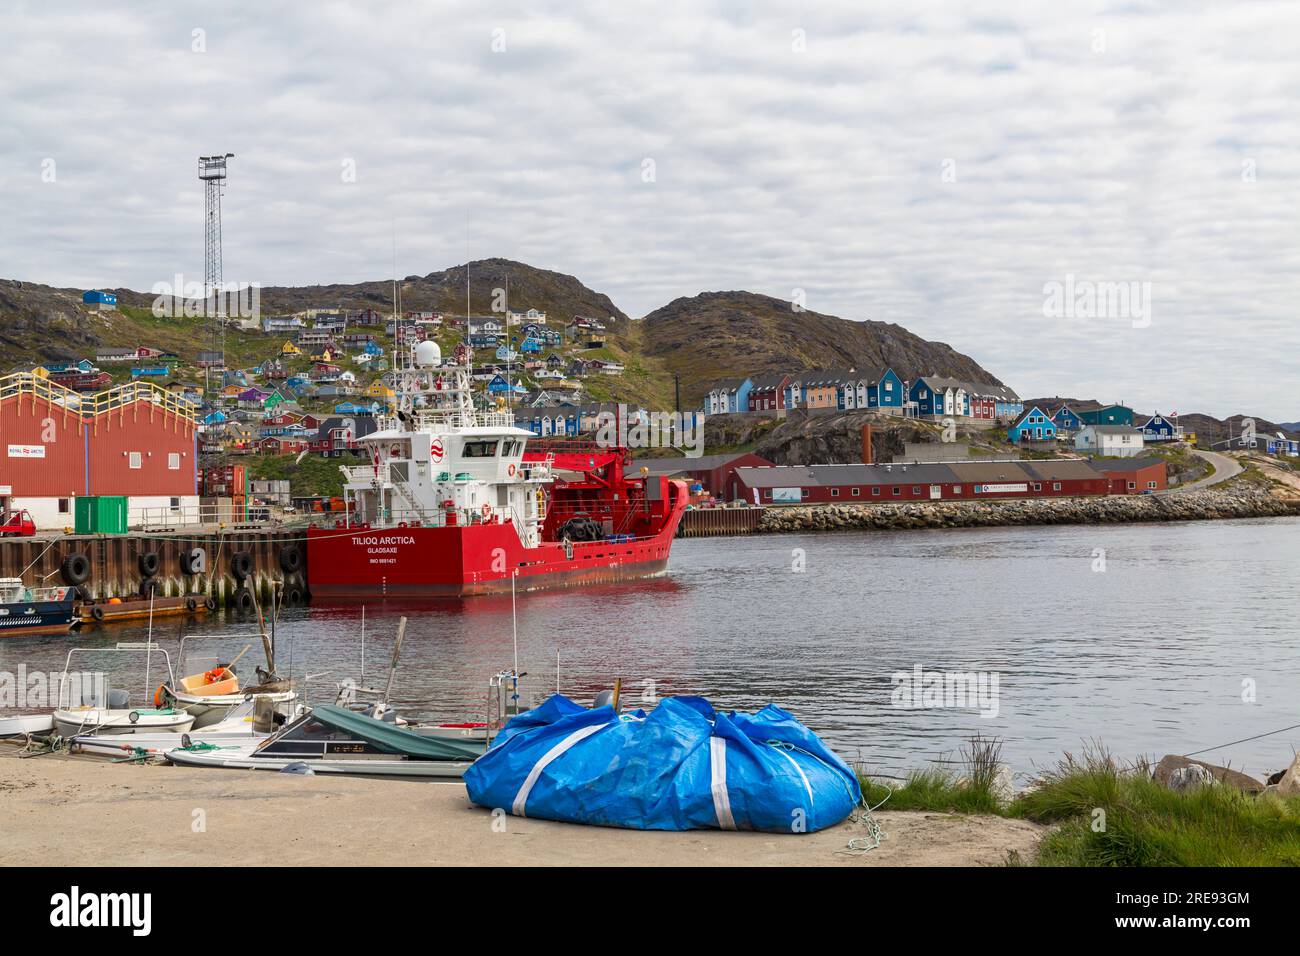 Le cargo Tilioq Arctica Gladsaxe dans le port de Qaqortoq, Groenland, en juillet Banque D'Images